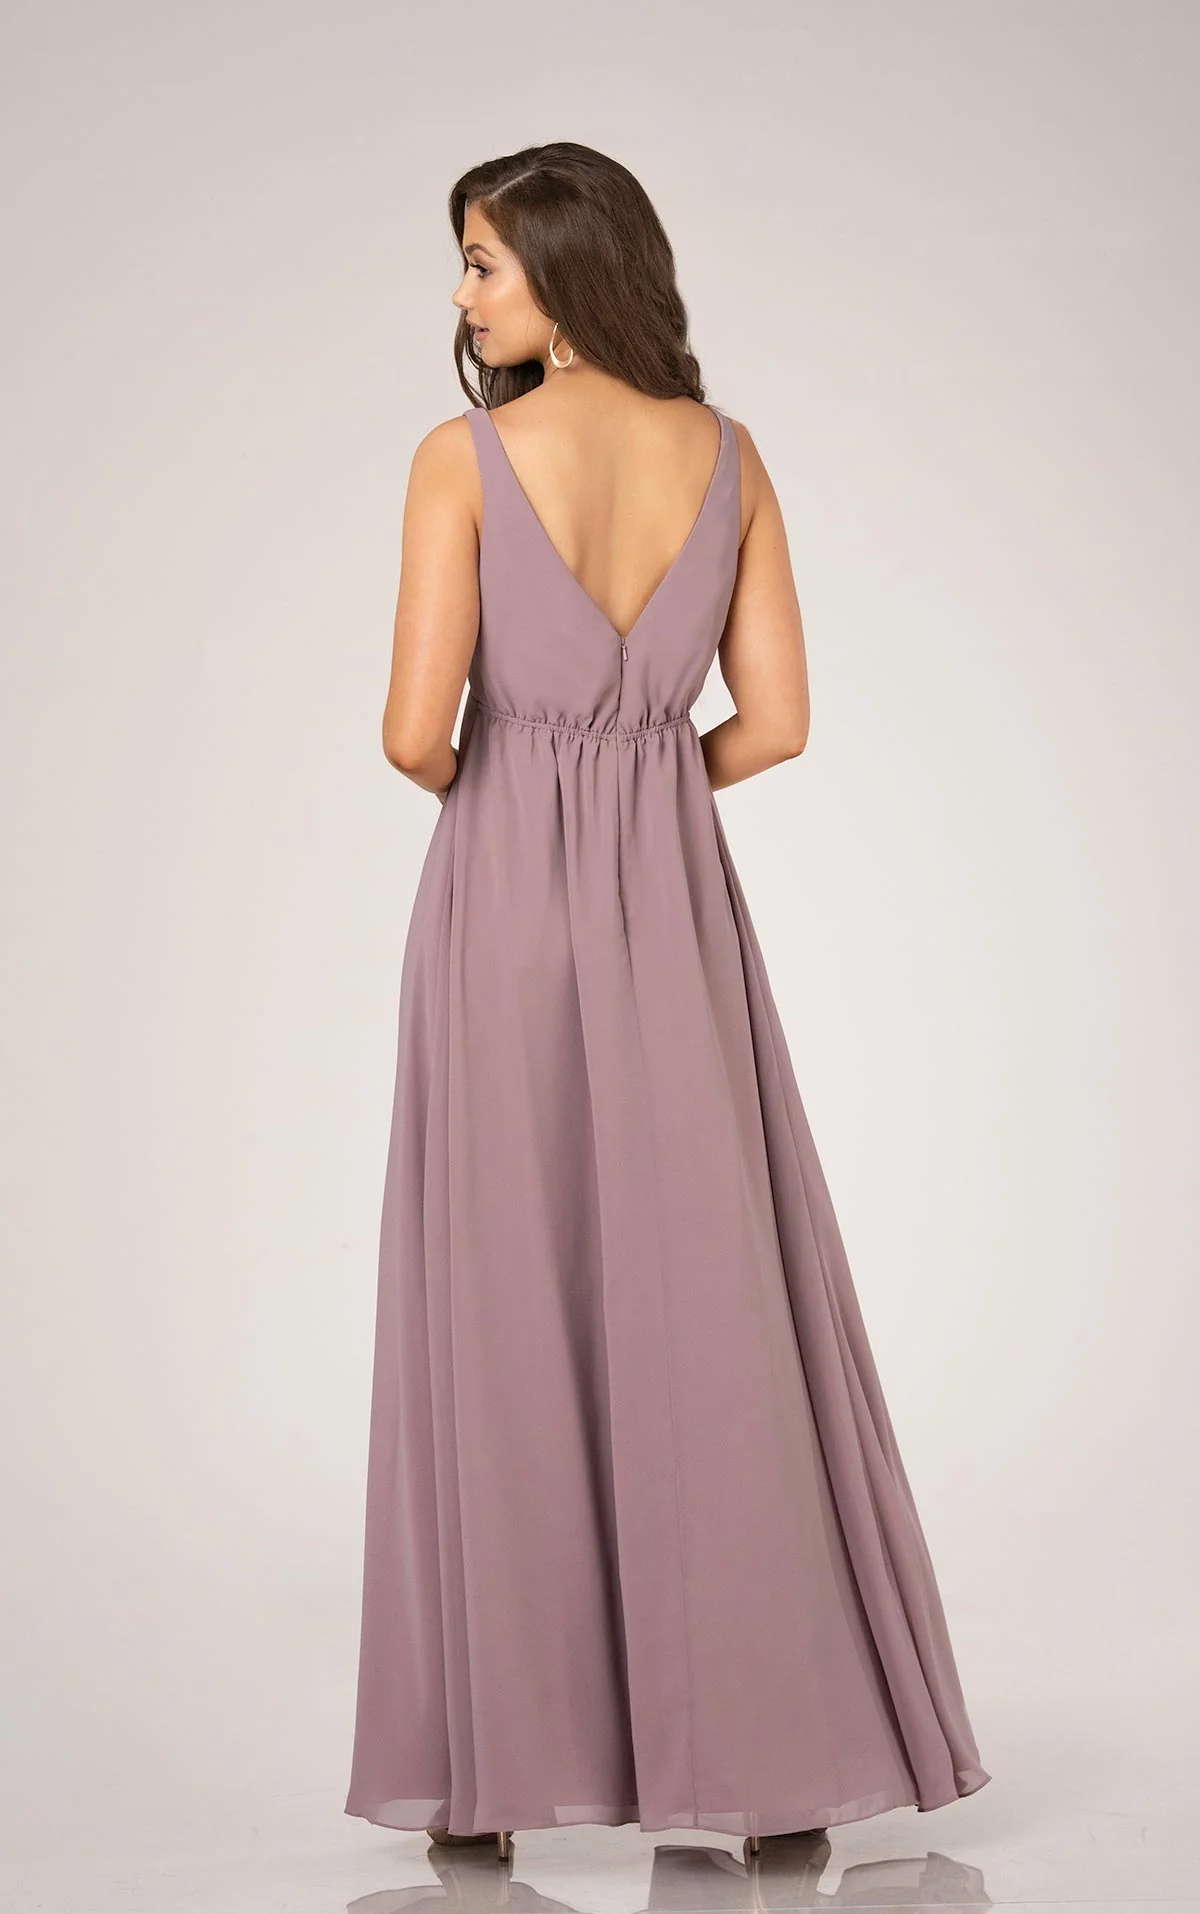 Sorella Vita Dress Style 9388 (Sangria-Size 18) Prom, Ball., Black-tie, Bridesmaid, Pageant